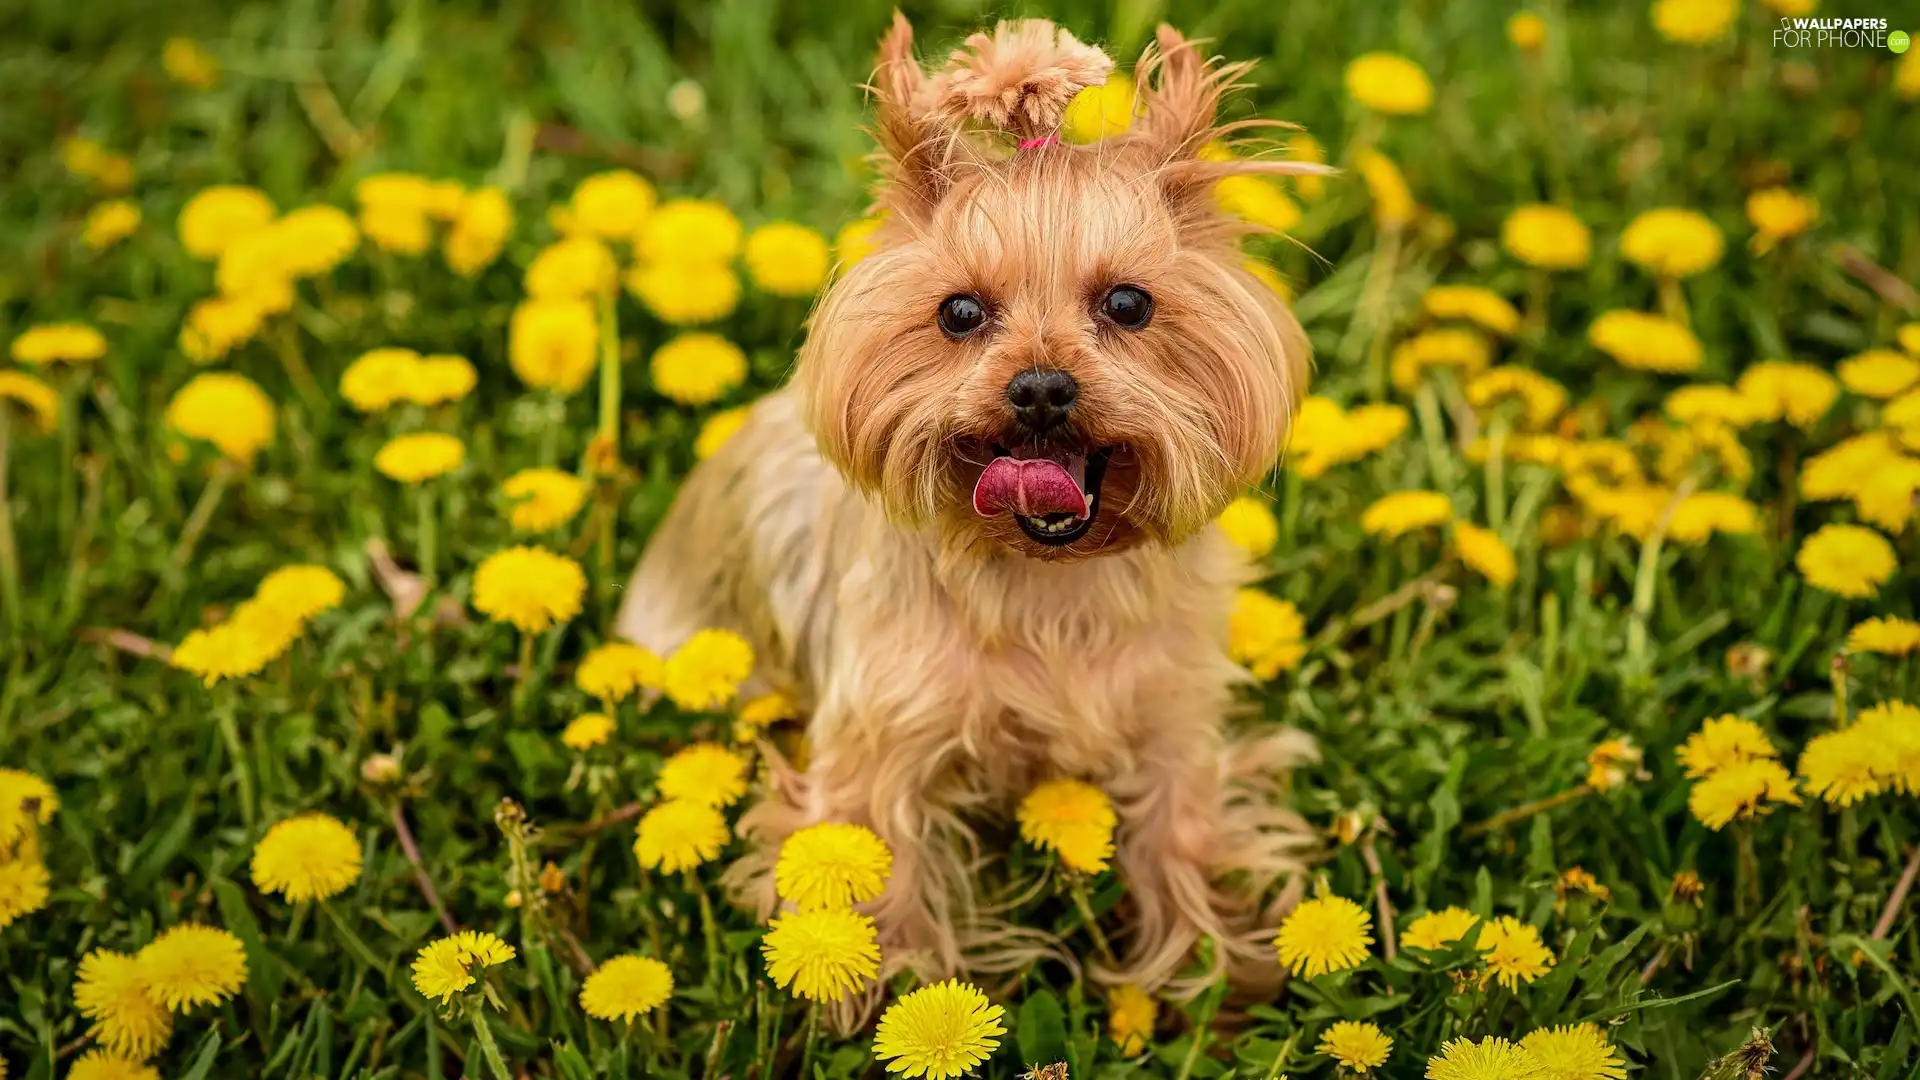 Flowers, dog, grass, Meadow, dandelions, Yorkshire Terrier